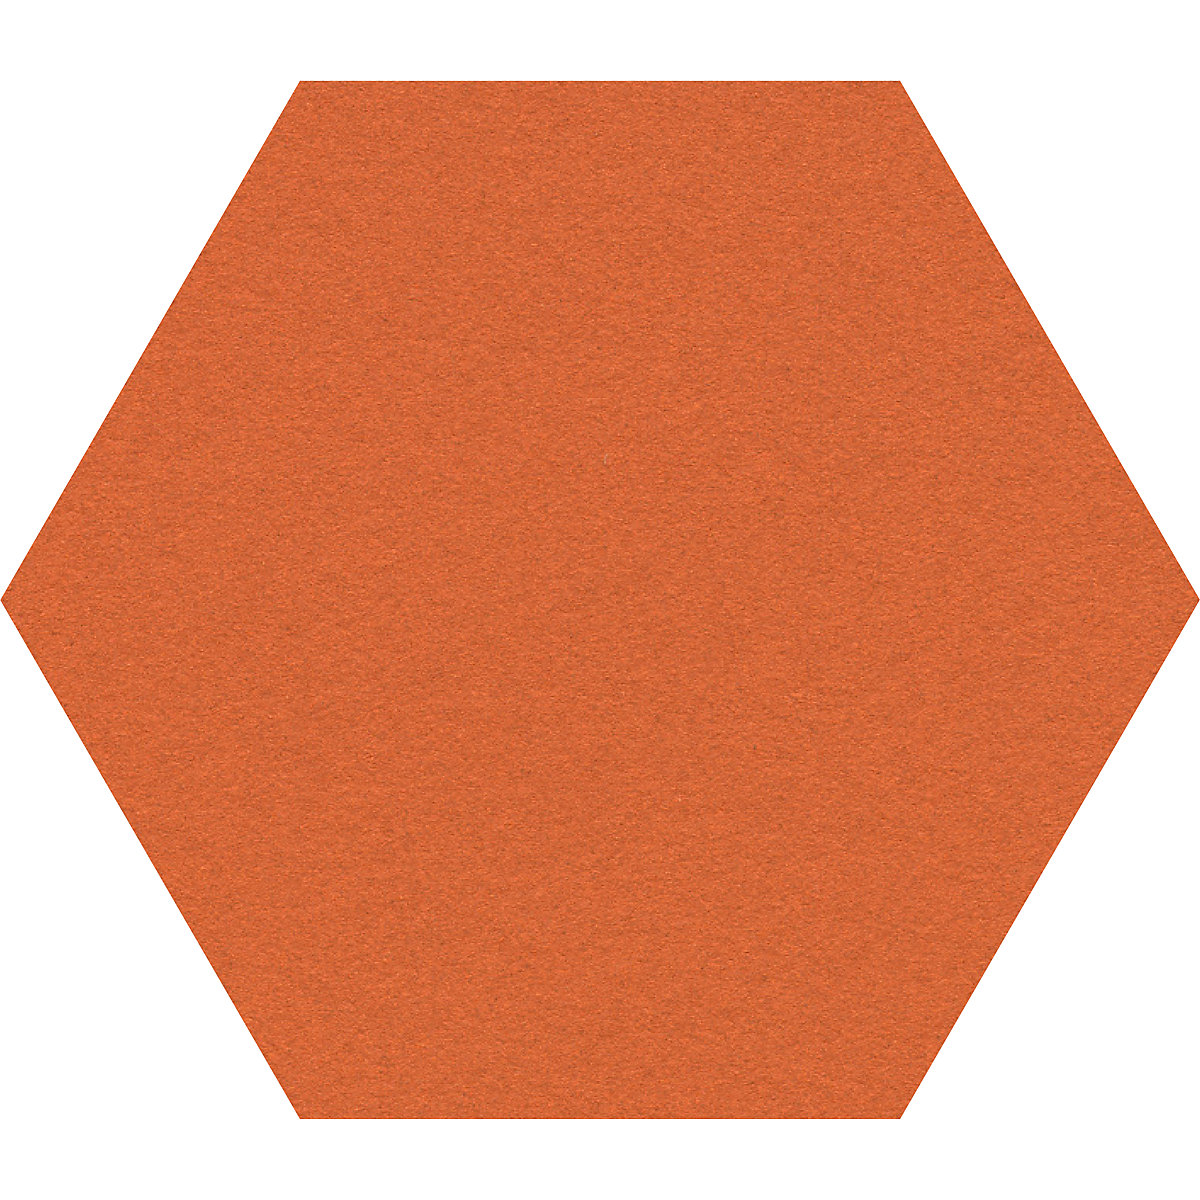 Quadro de pinos com design hexagonal – Chameleon, cortiça, LxA 600 x 600 mm, laranja-25